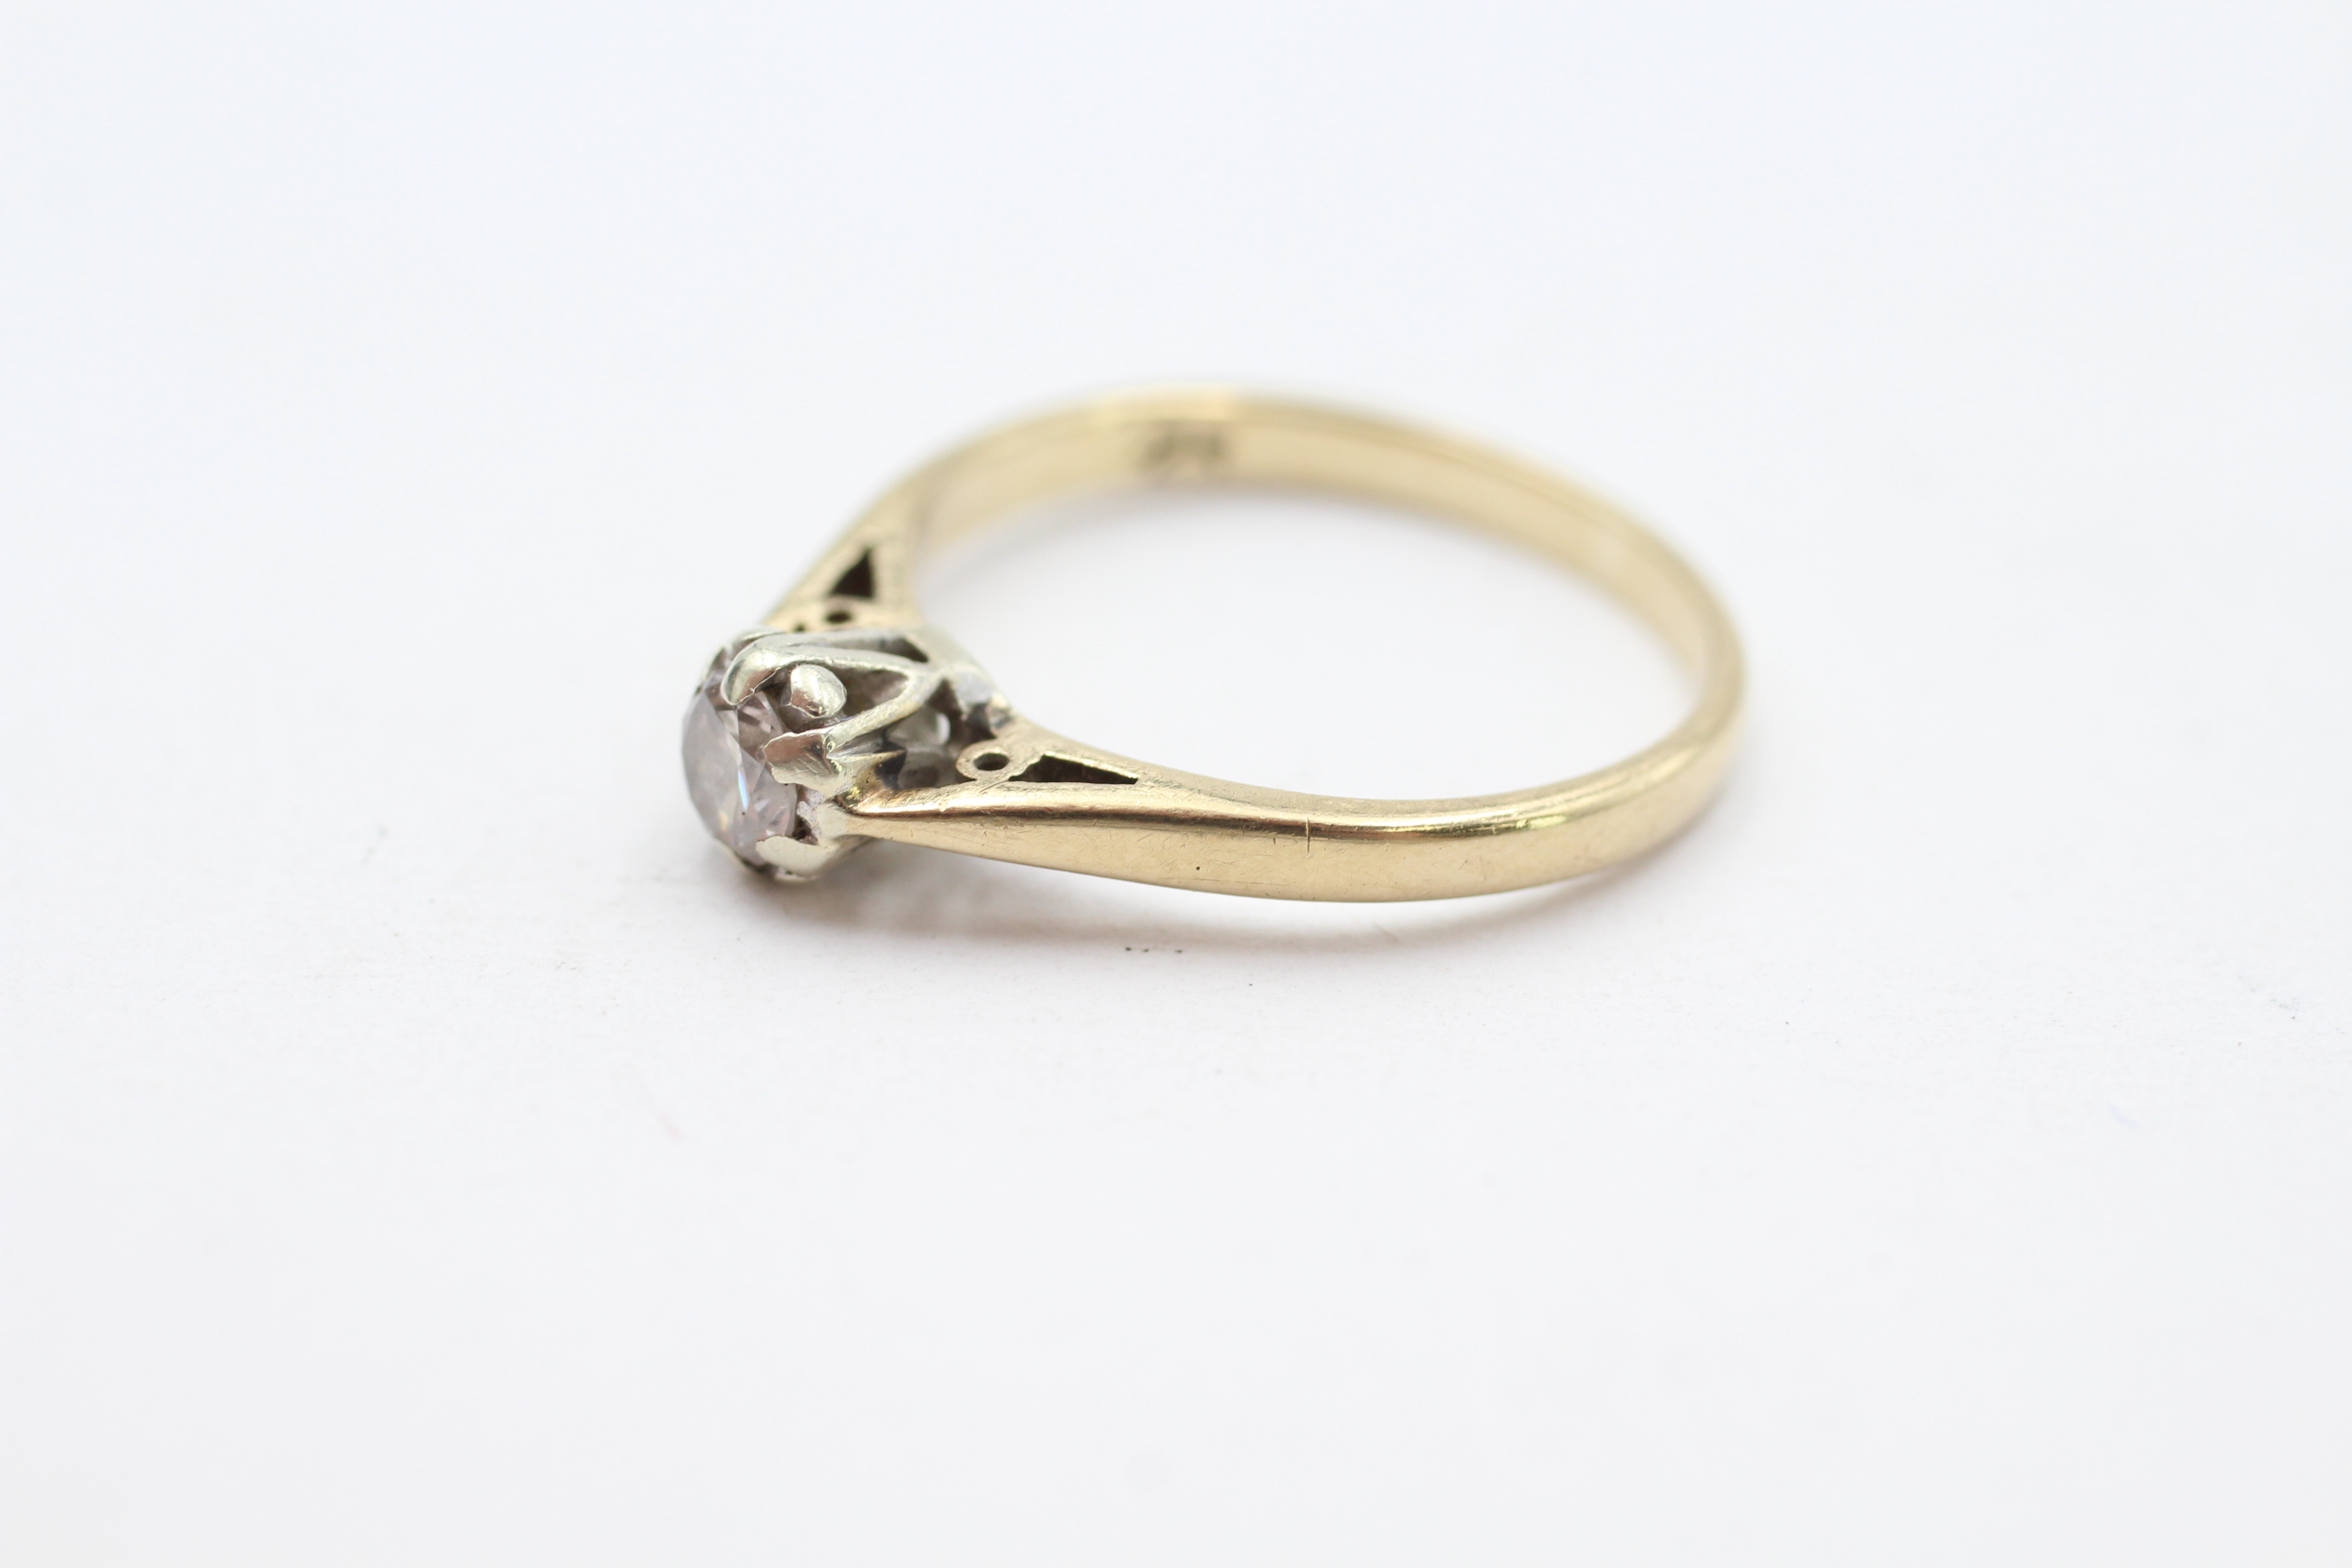 9ct gold round brilliant diamond single stone ring Size M - 2 g - Image 3 of 4